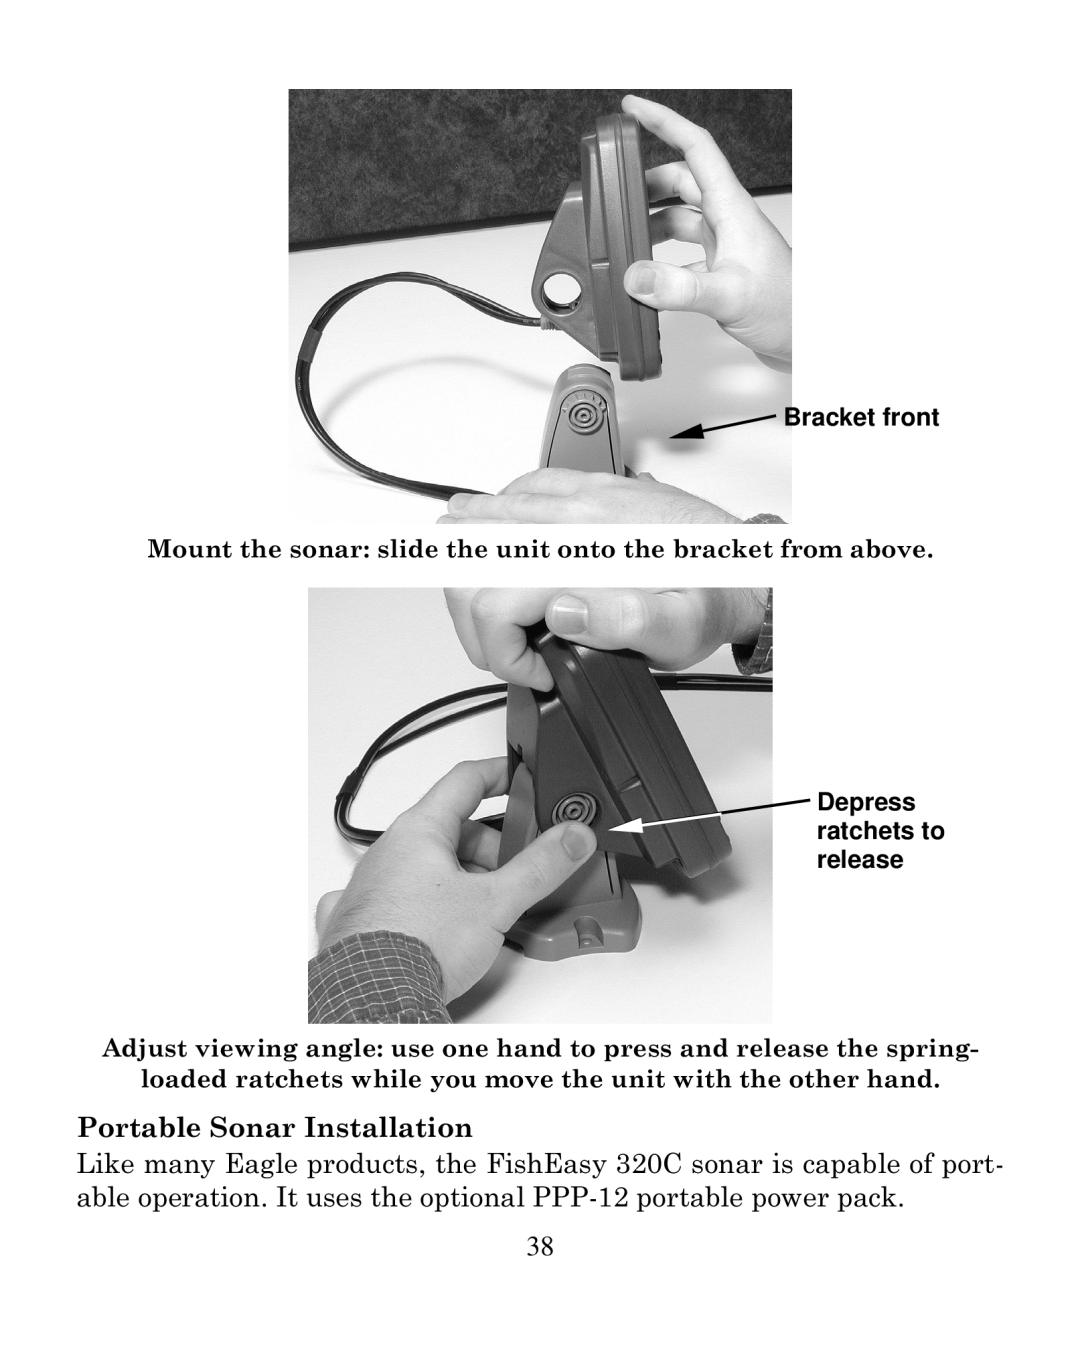 Eagle Electronics 320C manual Portable Sonar Installation, Bracket front, Depress ratchets to release 